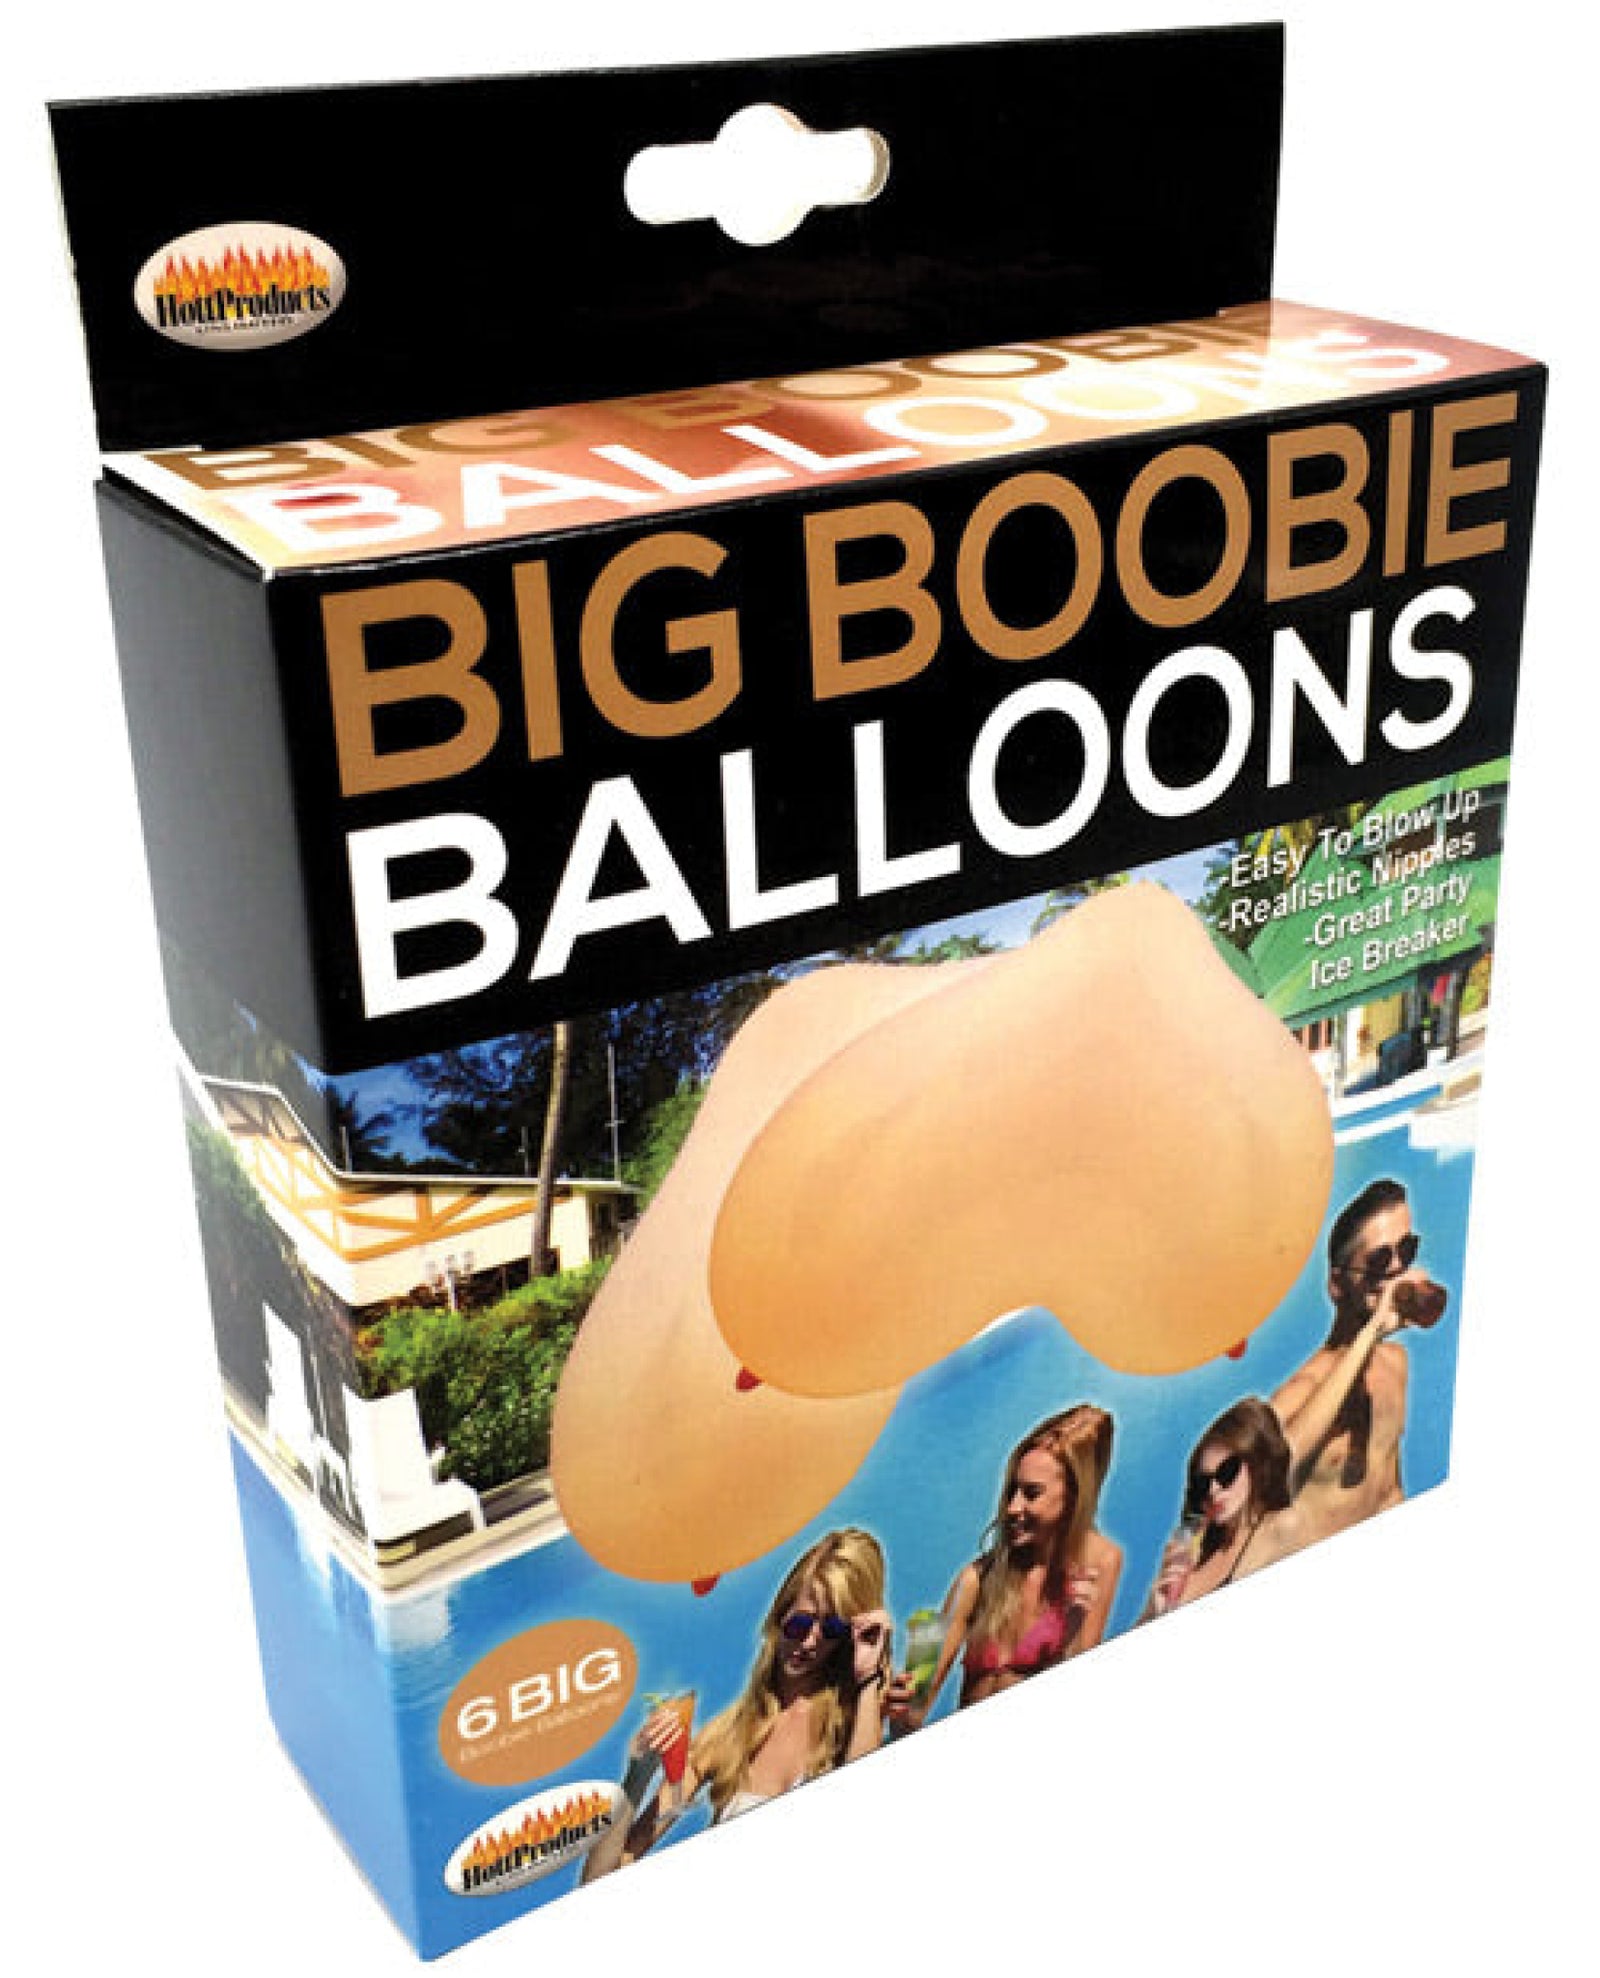 Big Boobie Balloons - Flesh Box Of 6 Hott Products